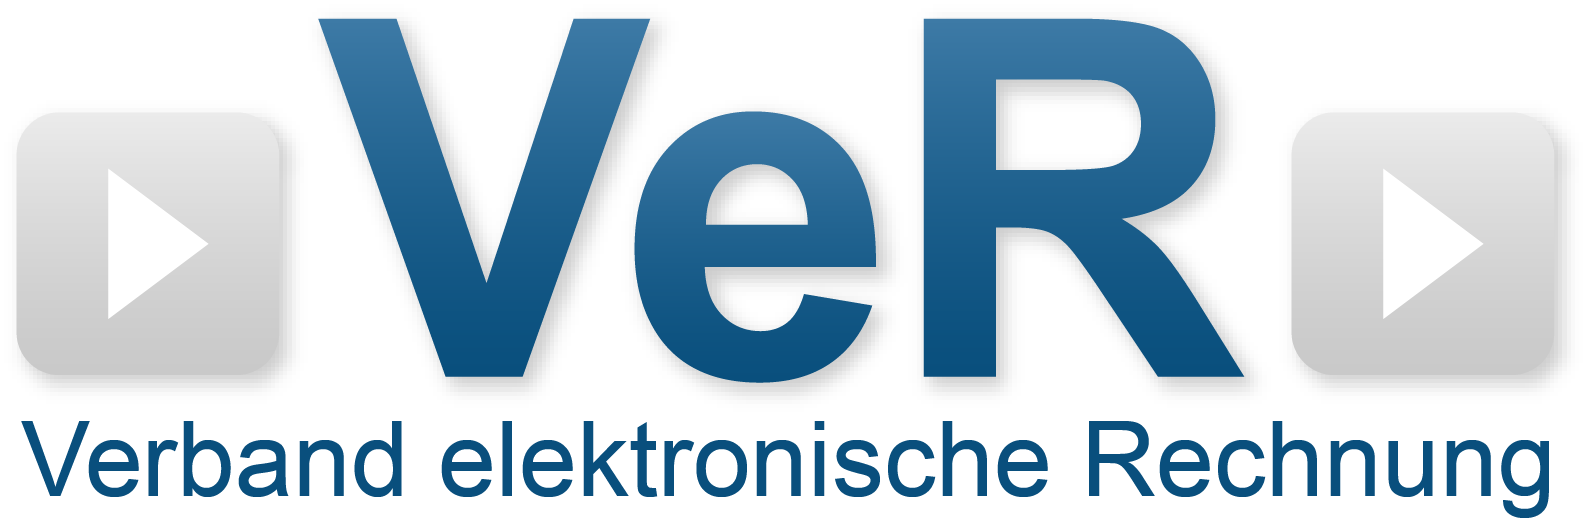 Official logo of the Germany VeR association (Verband elektronische Rechnung)